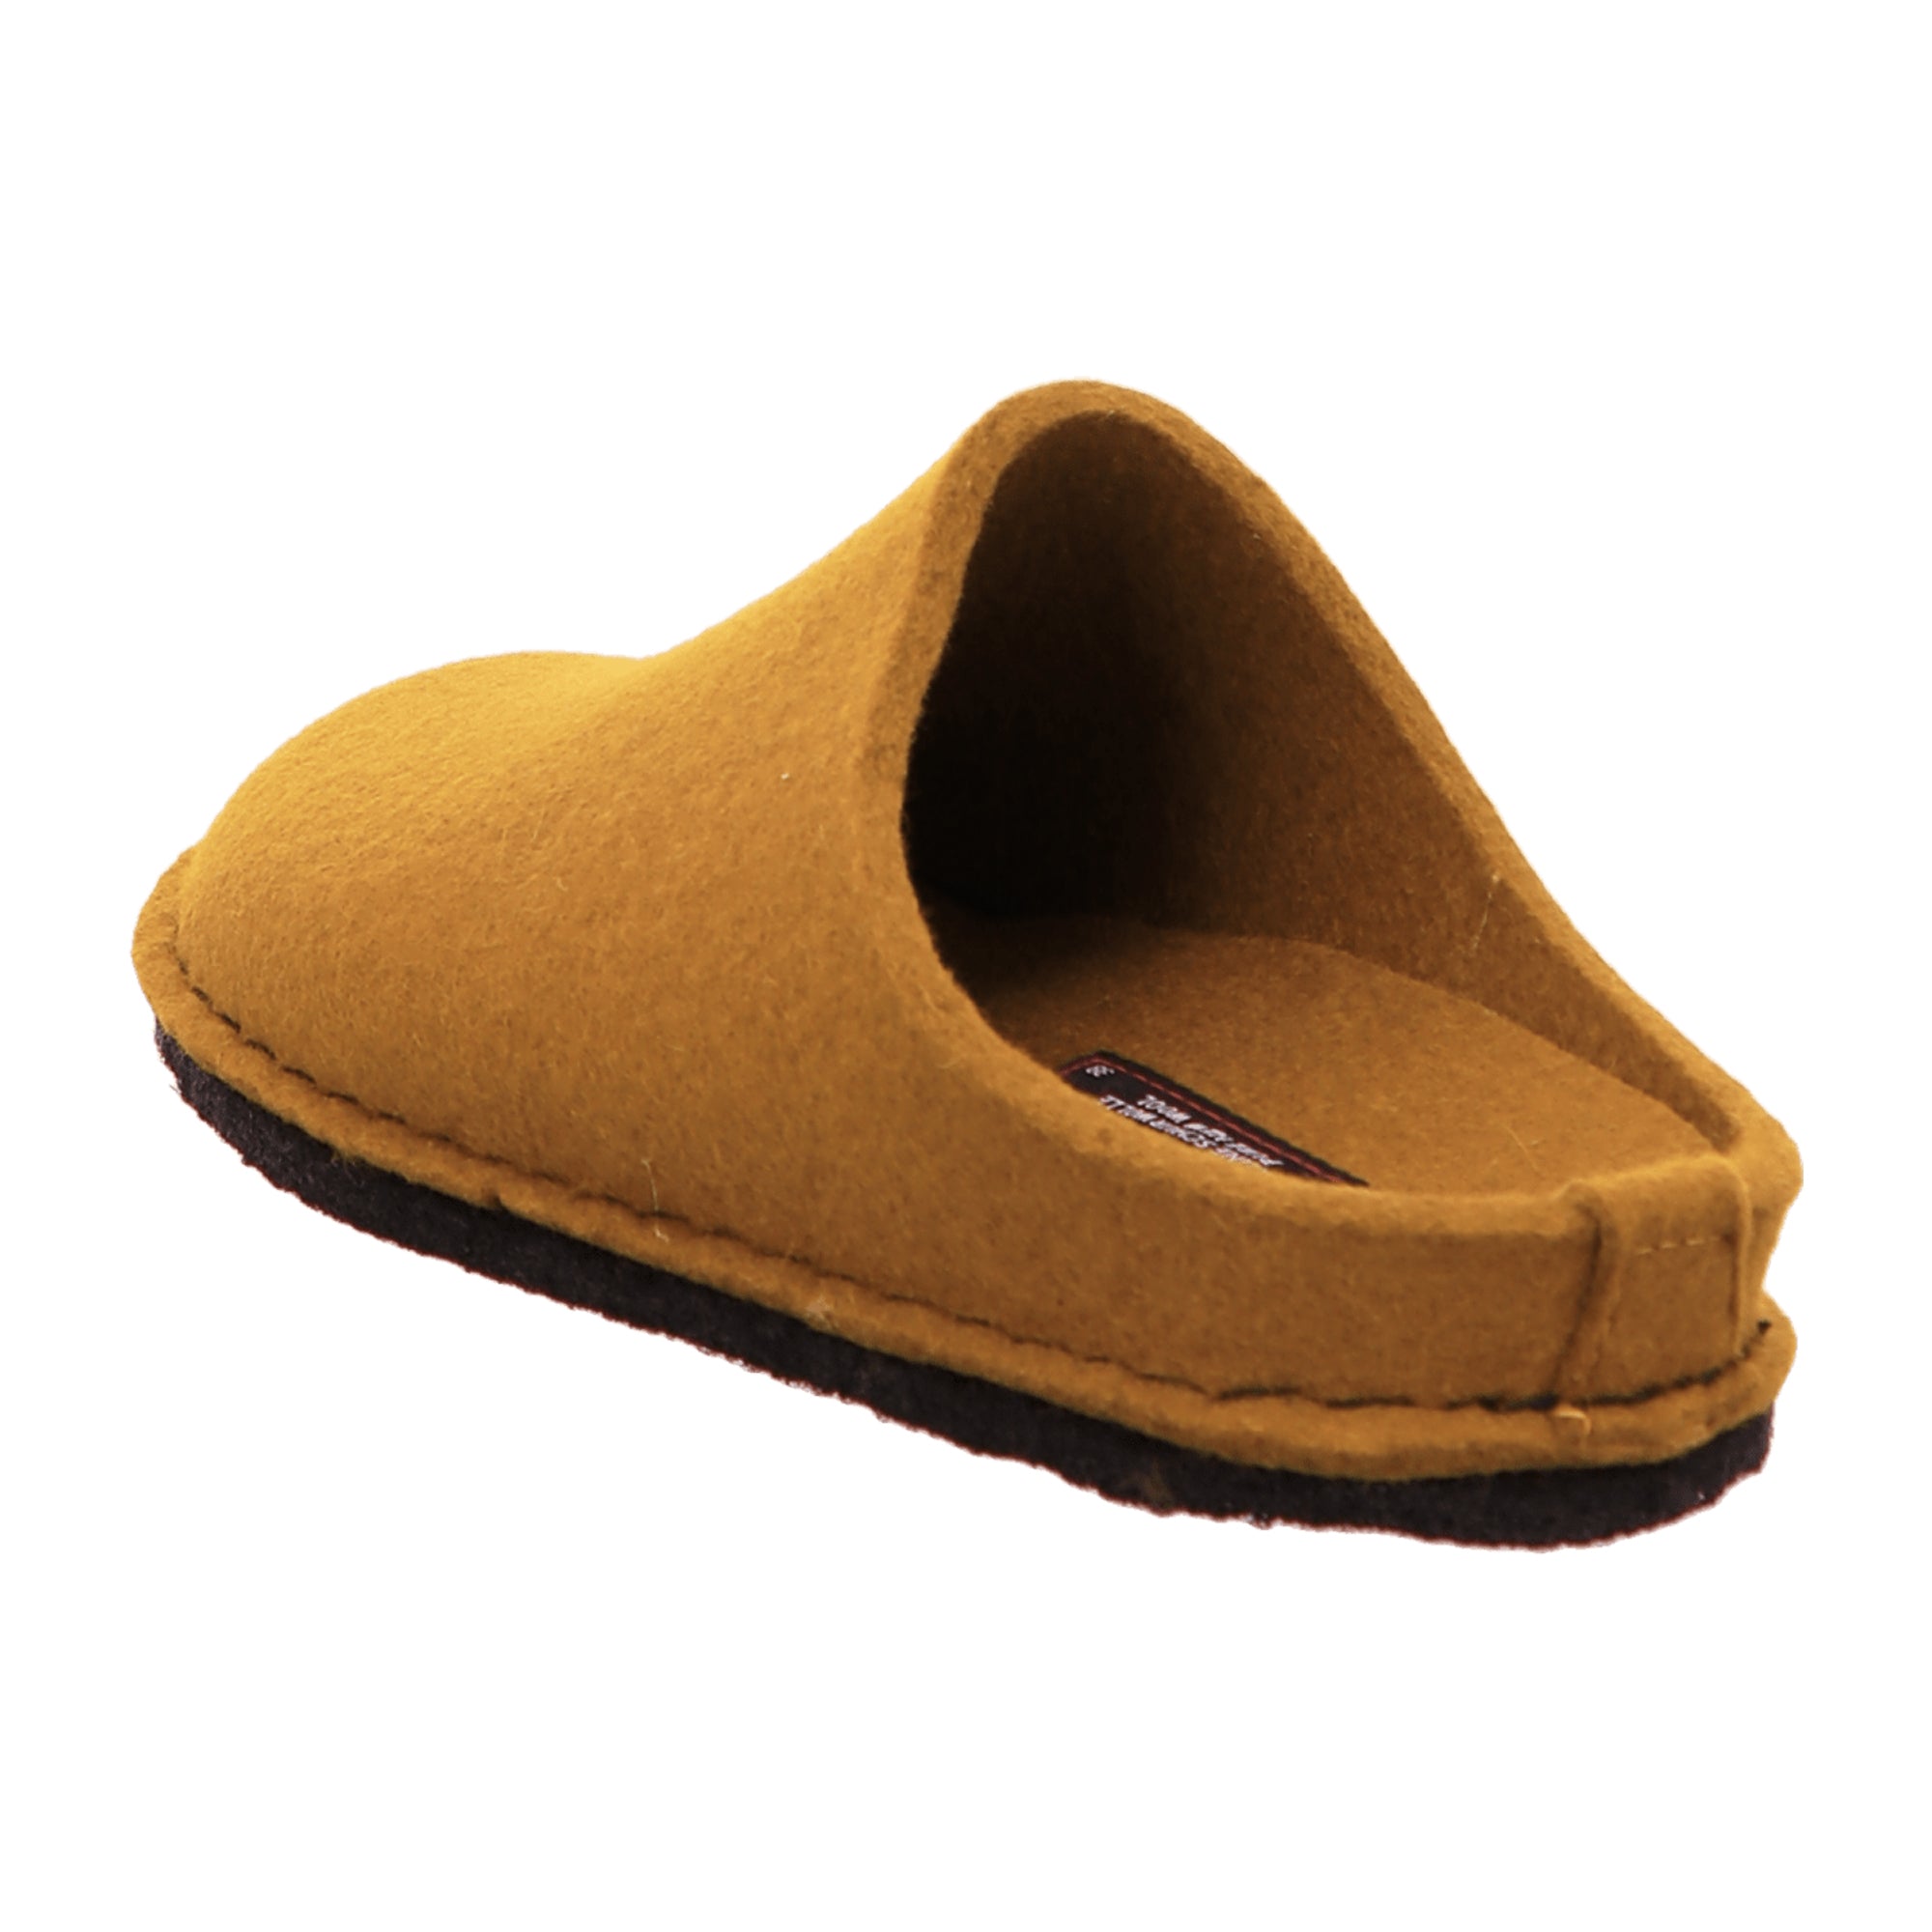 Haflinger Women's Slippers, Yellow - Stylish & Durable Indoor Footwear